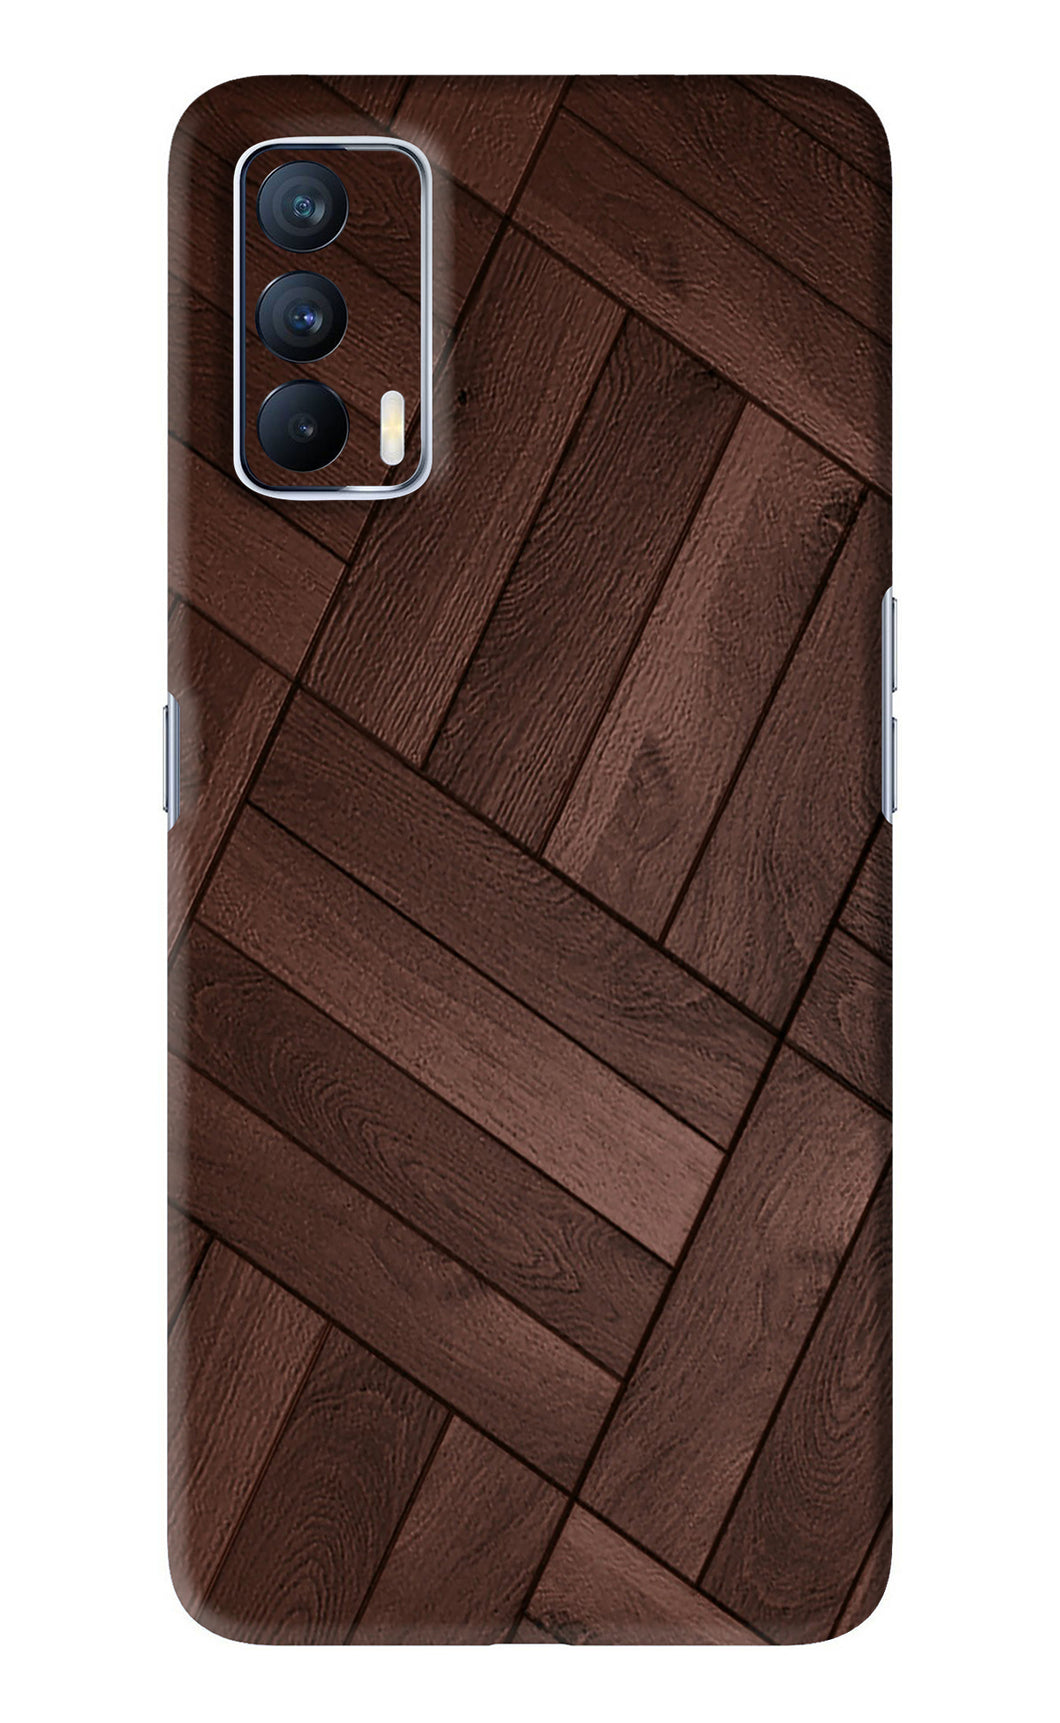 Wooden Texture Design Realme X7 Back Skin Wrap